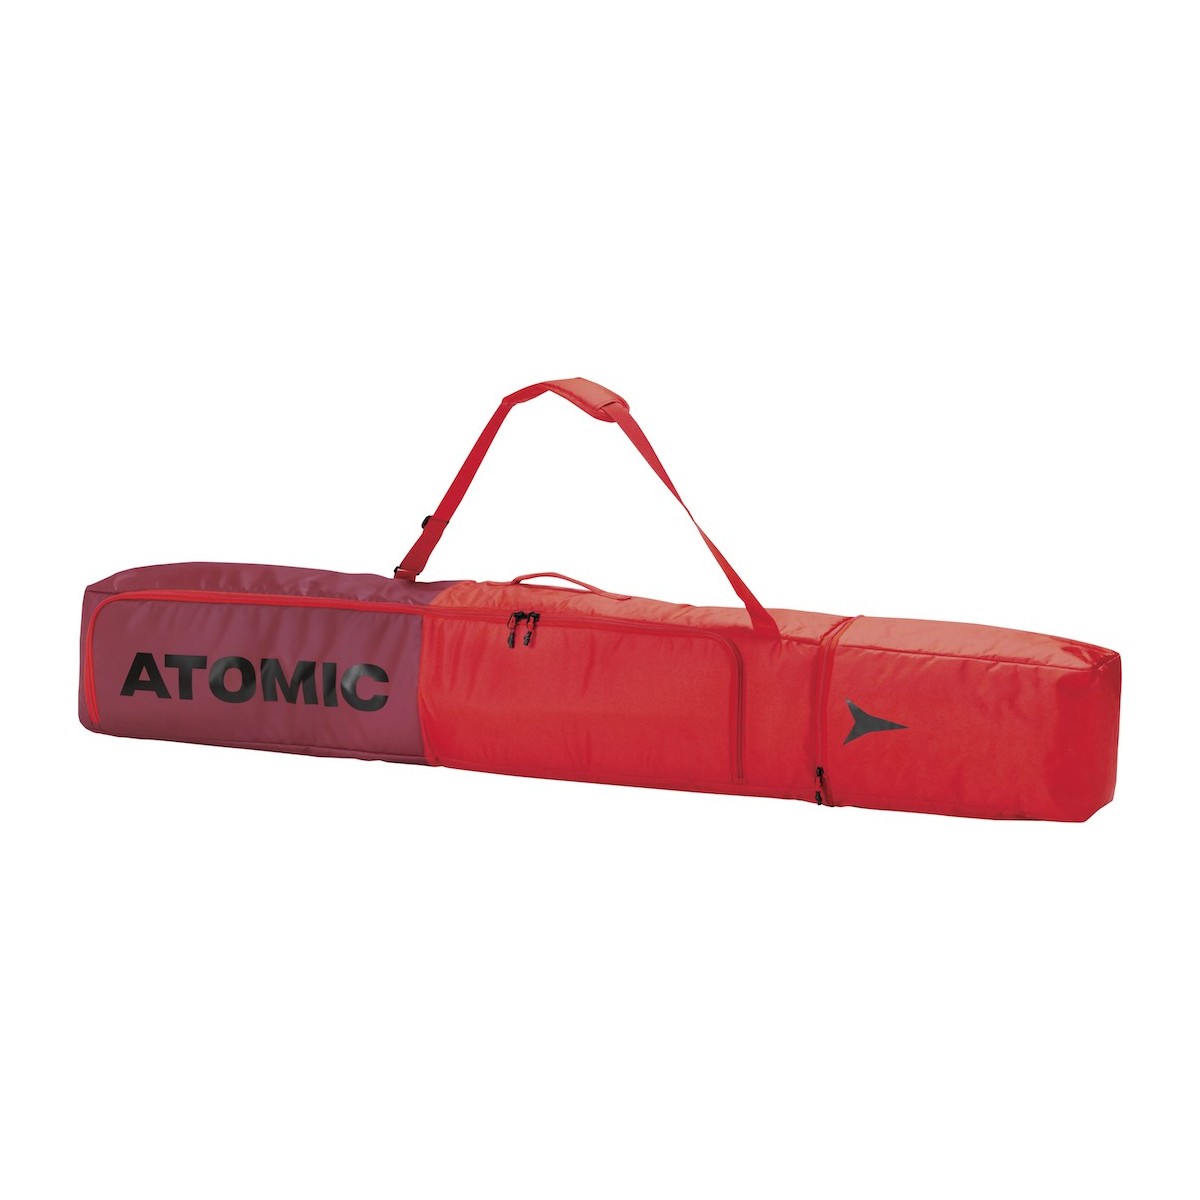 Atomic Double Ski Bag Red-Rio Red